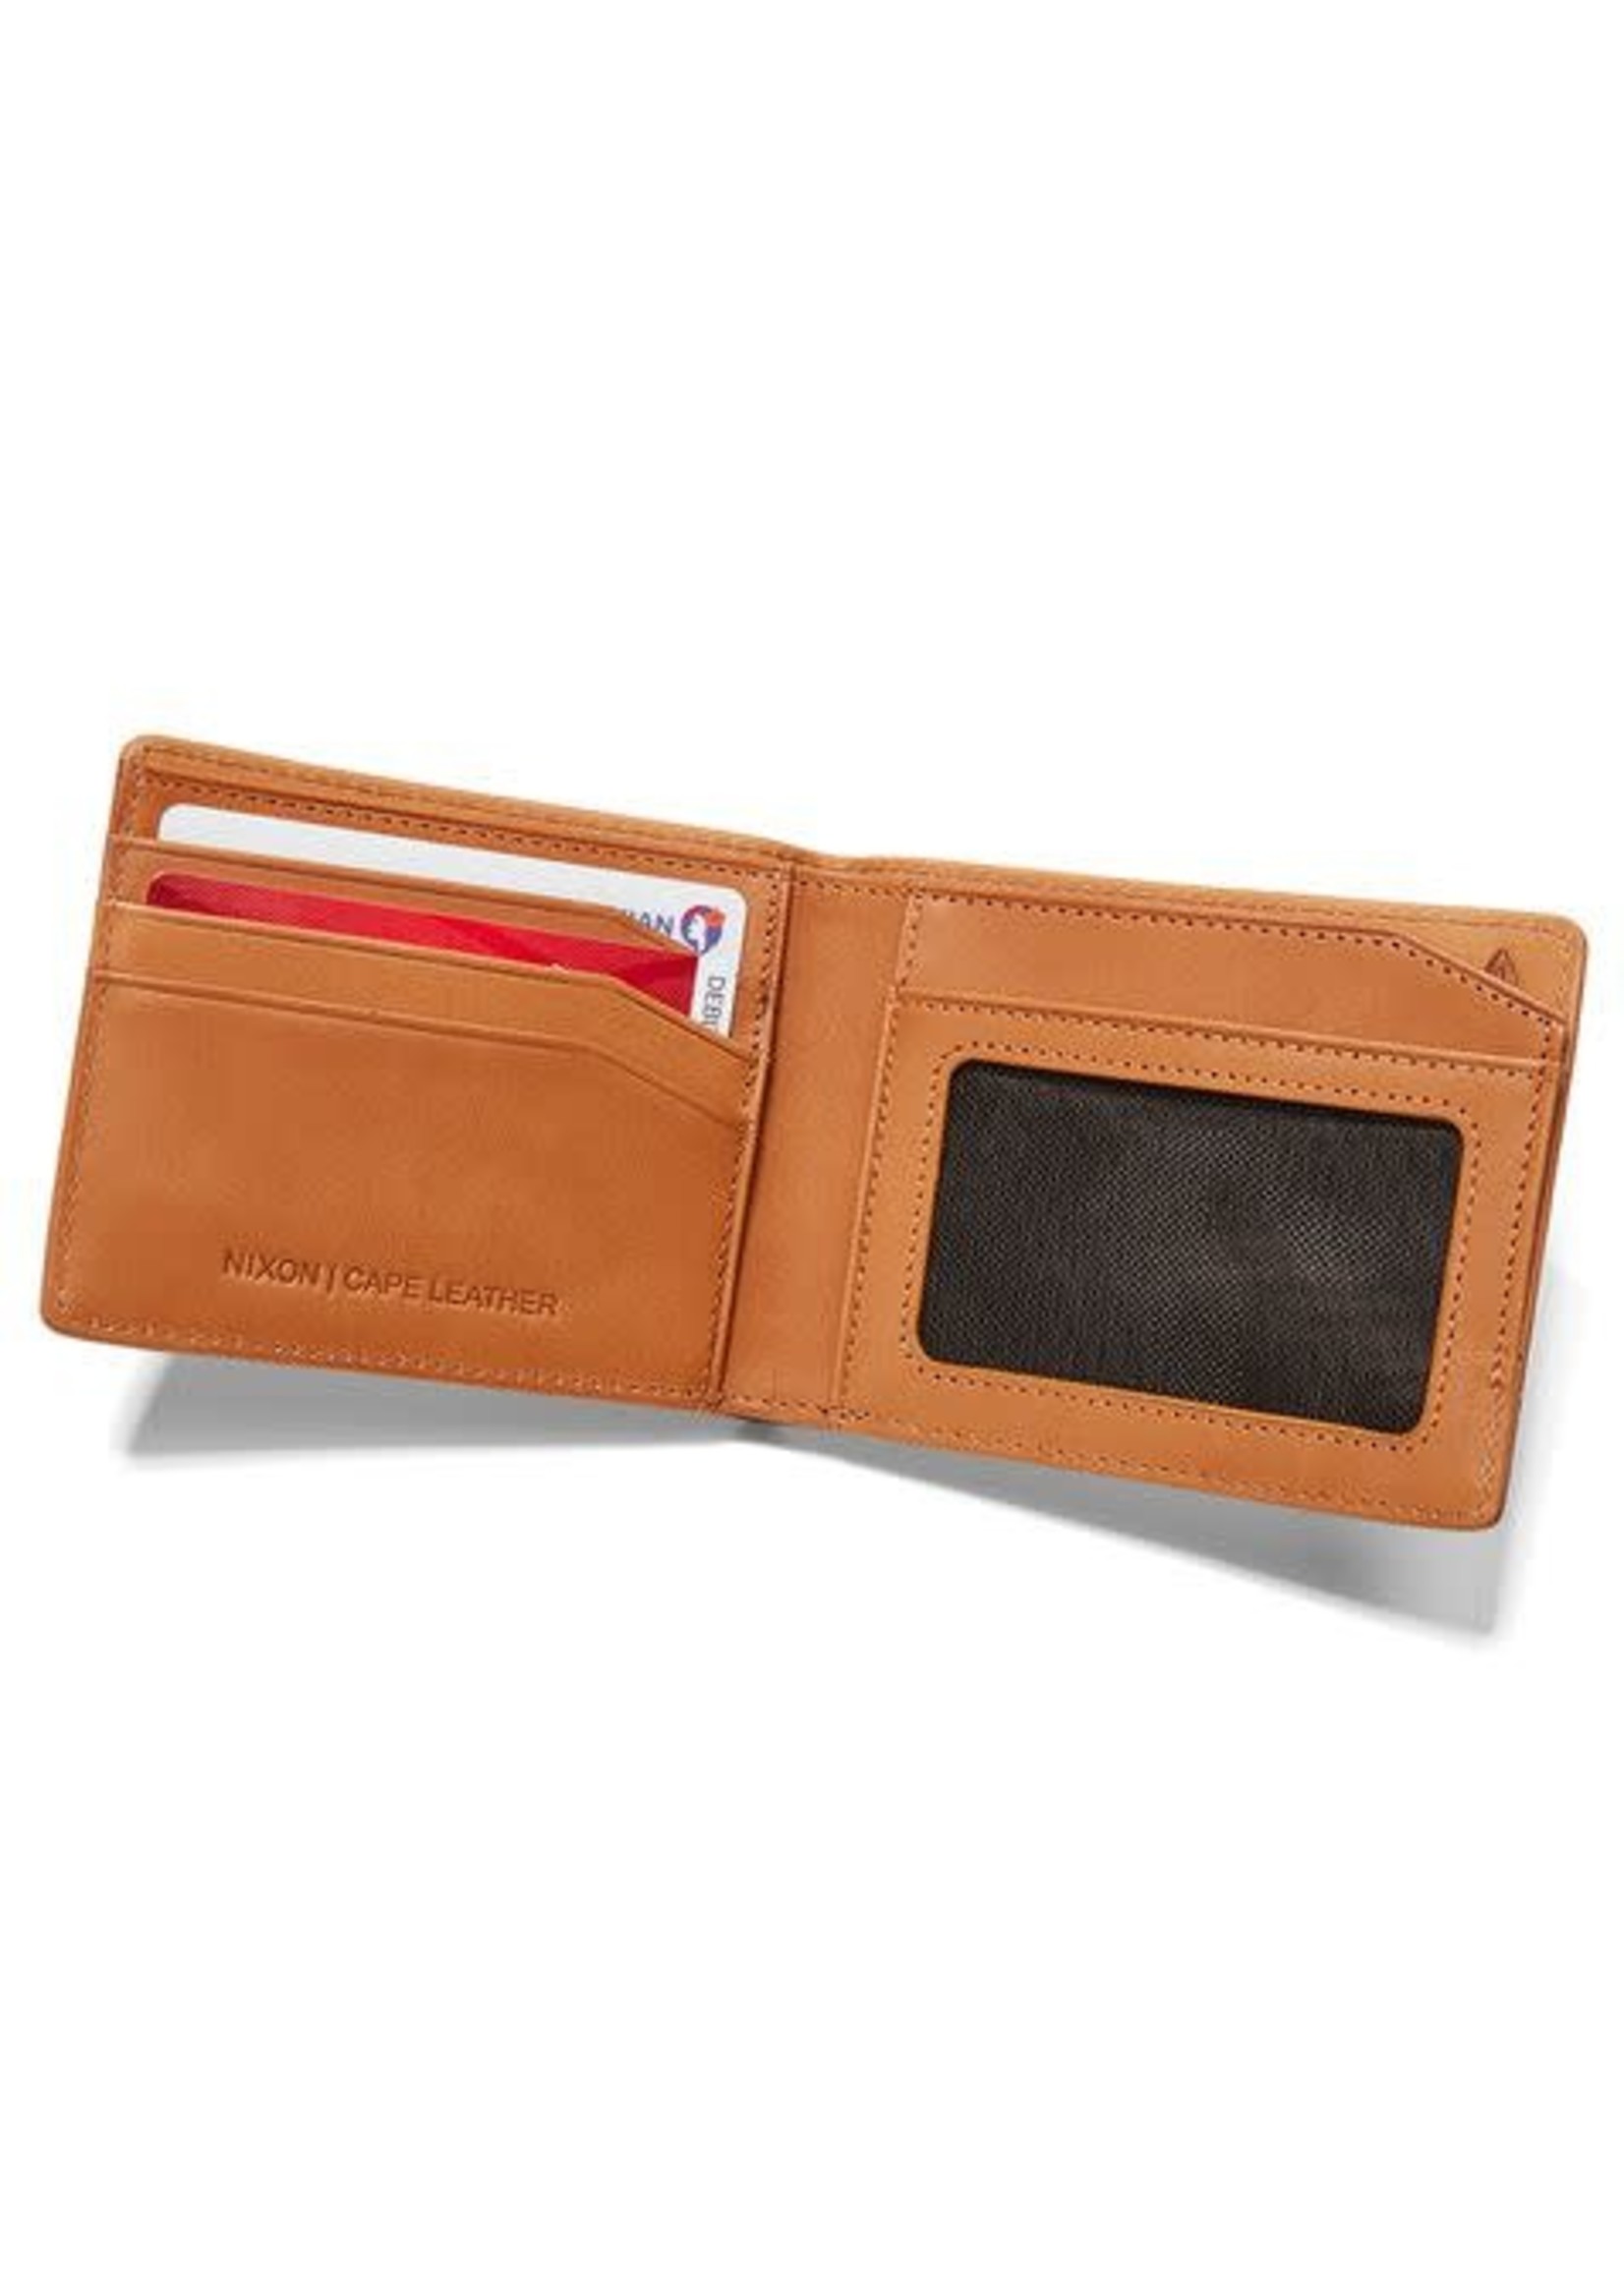 NIXON NIXON Cape Leather Wallet